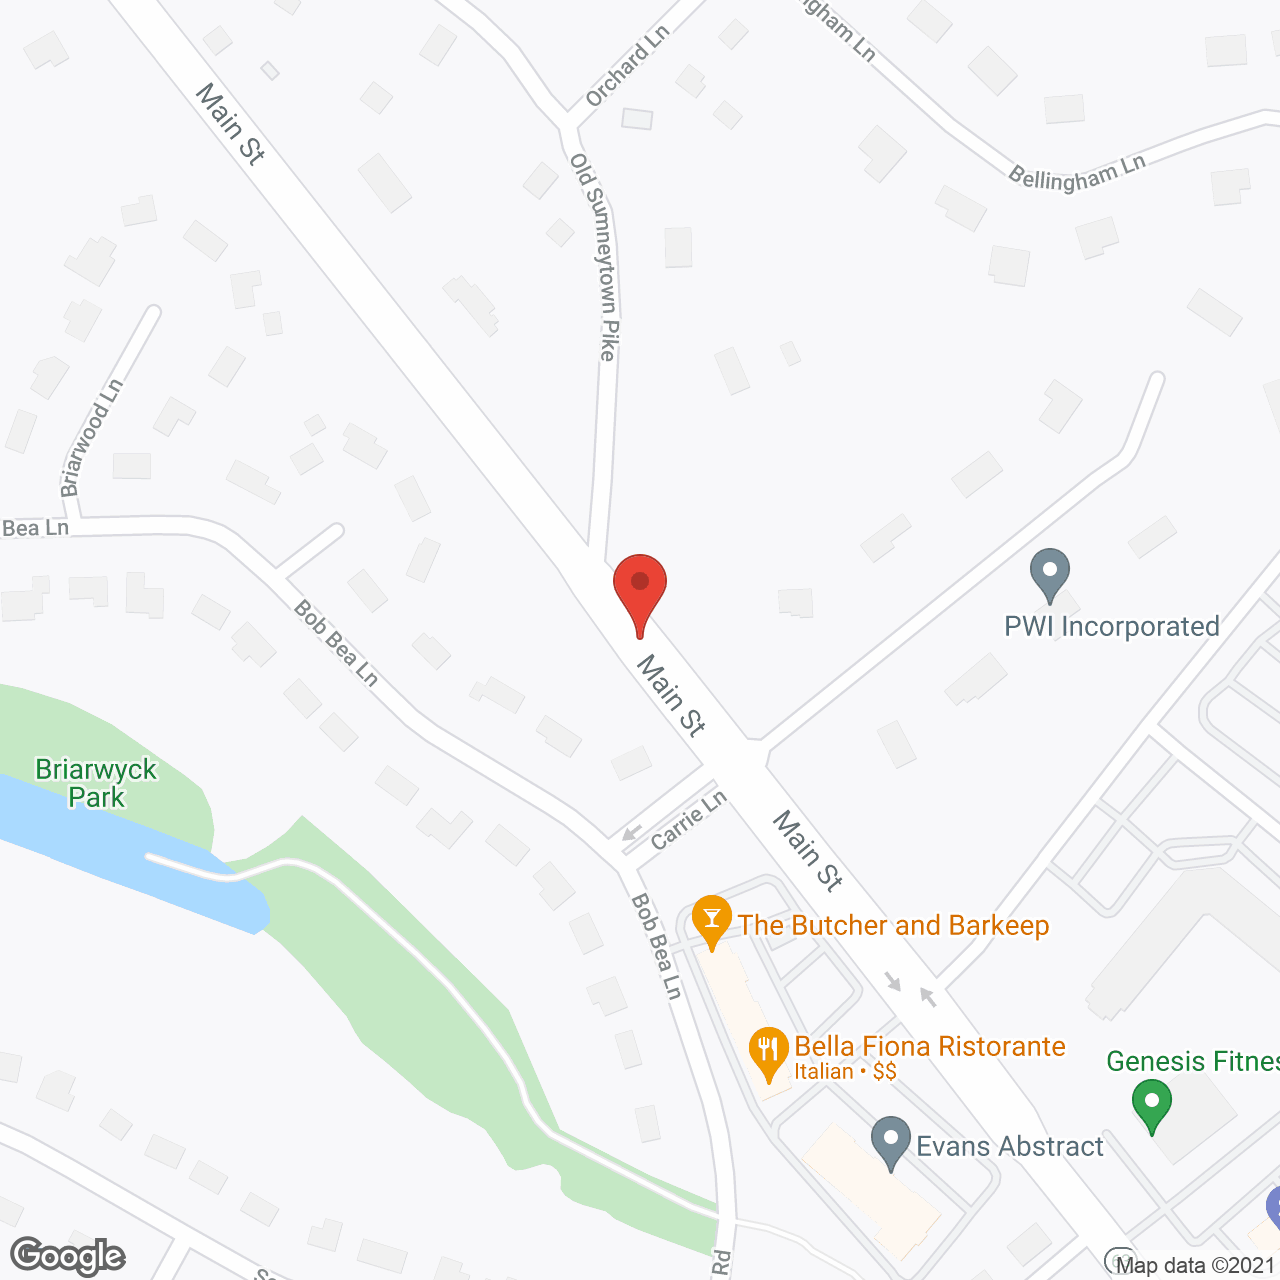 Arbour Square in google map